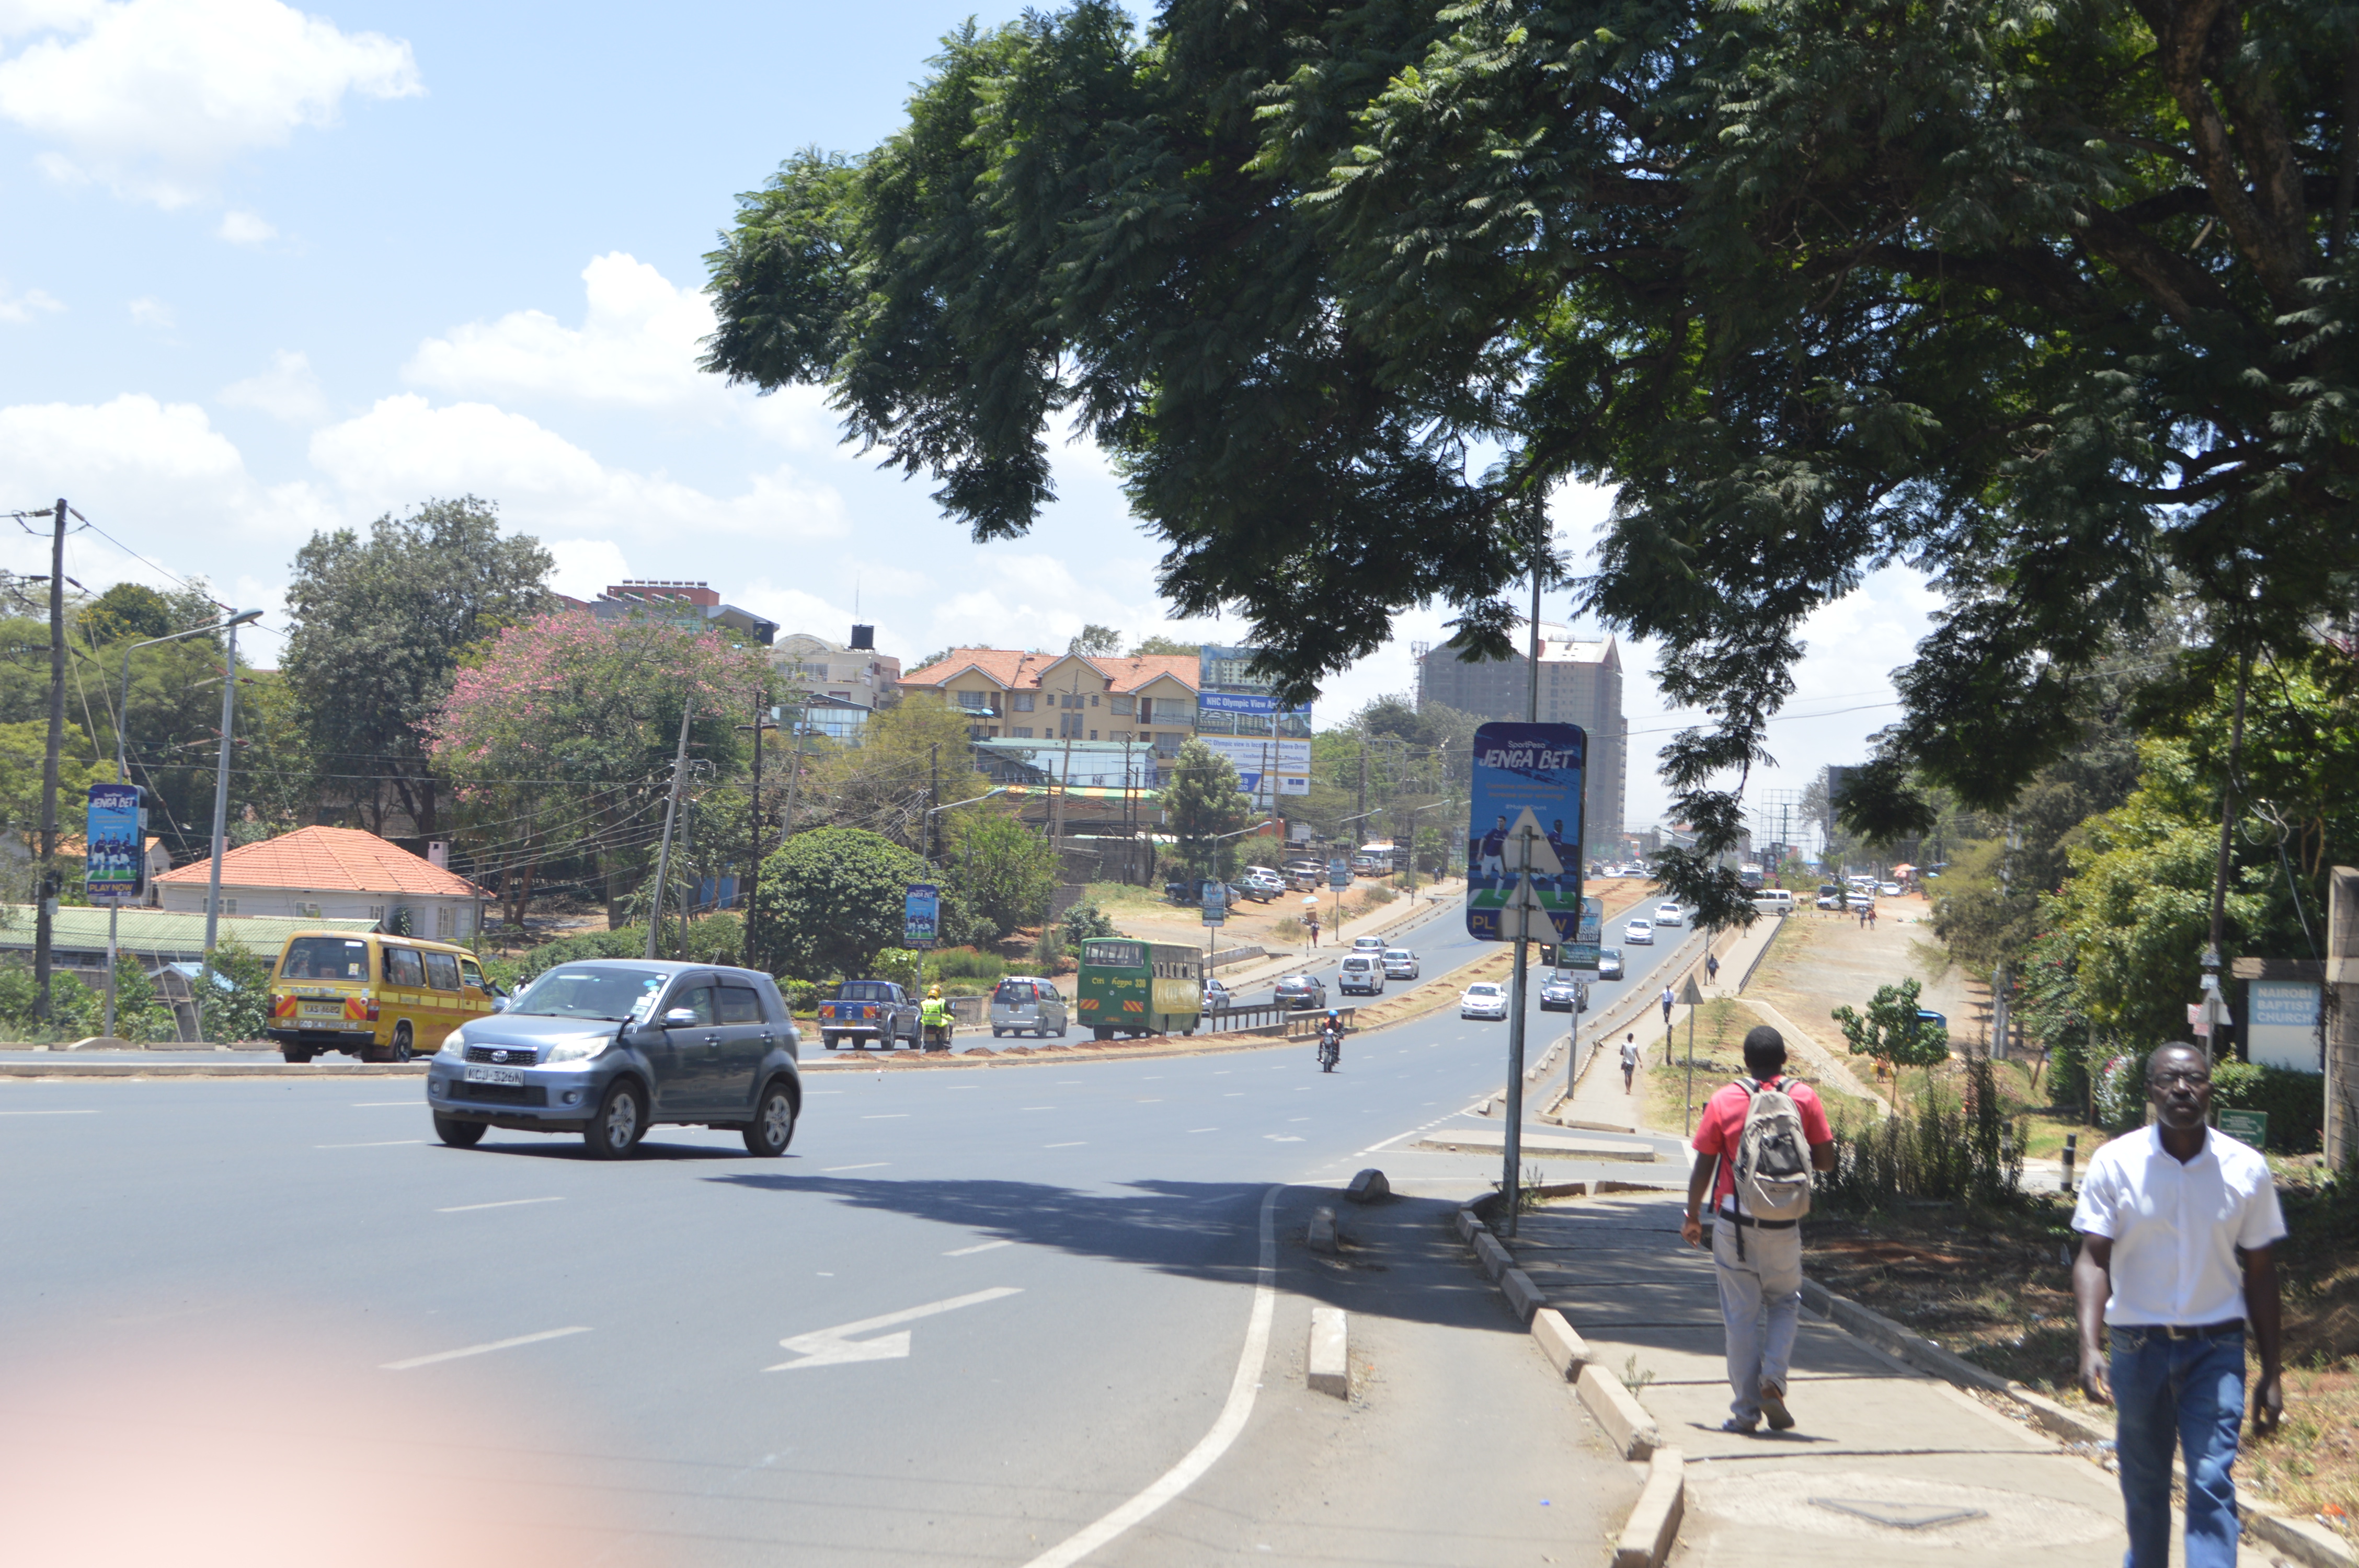 Ngong Road, Nairobi, the scene of the murder